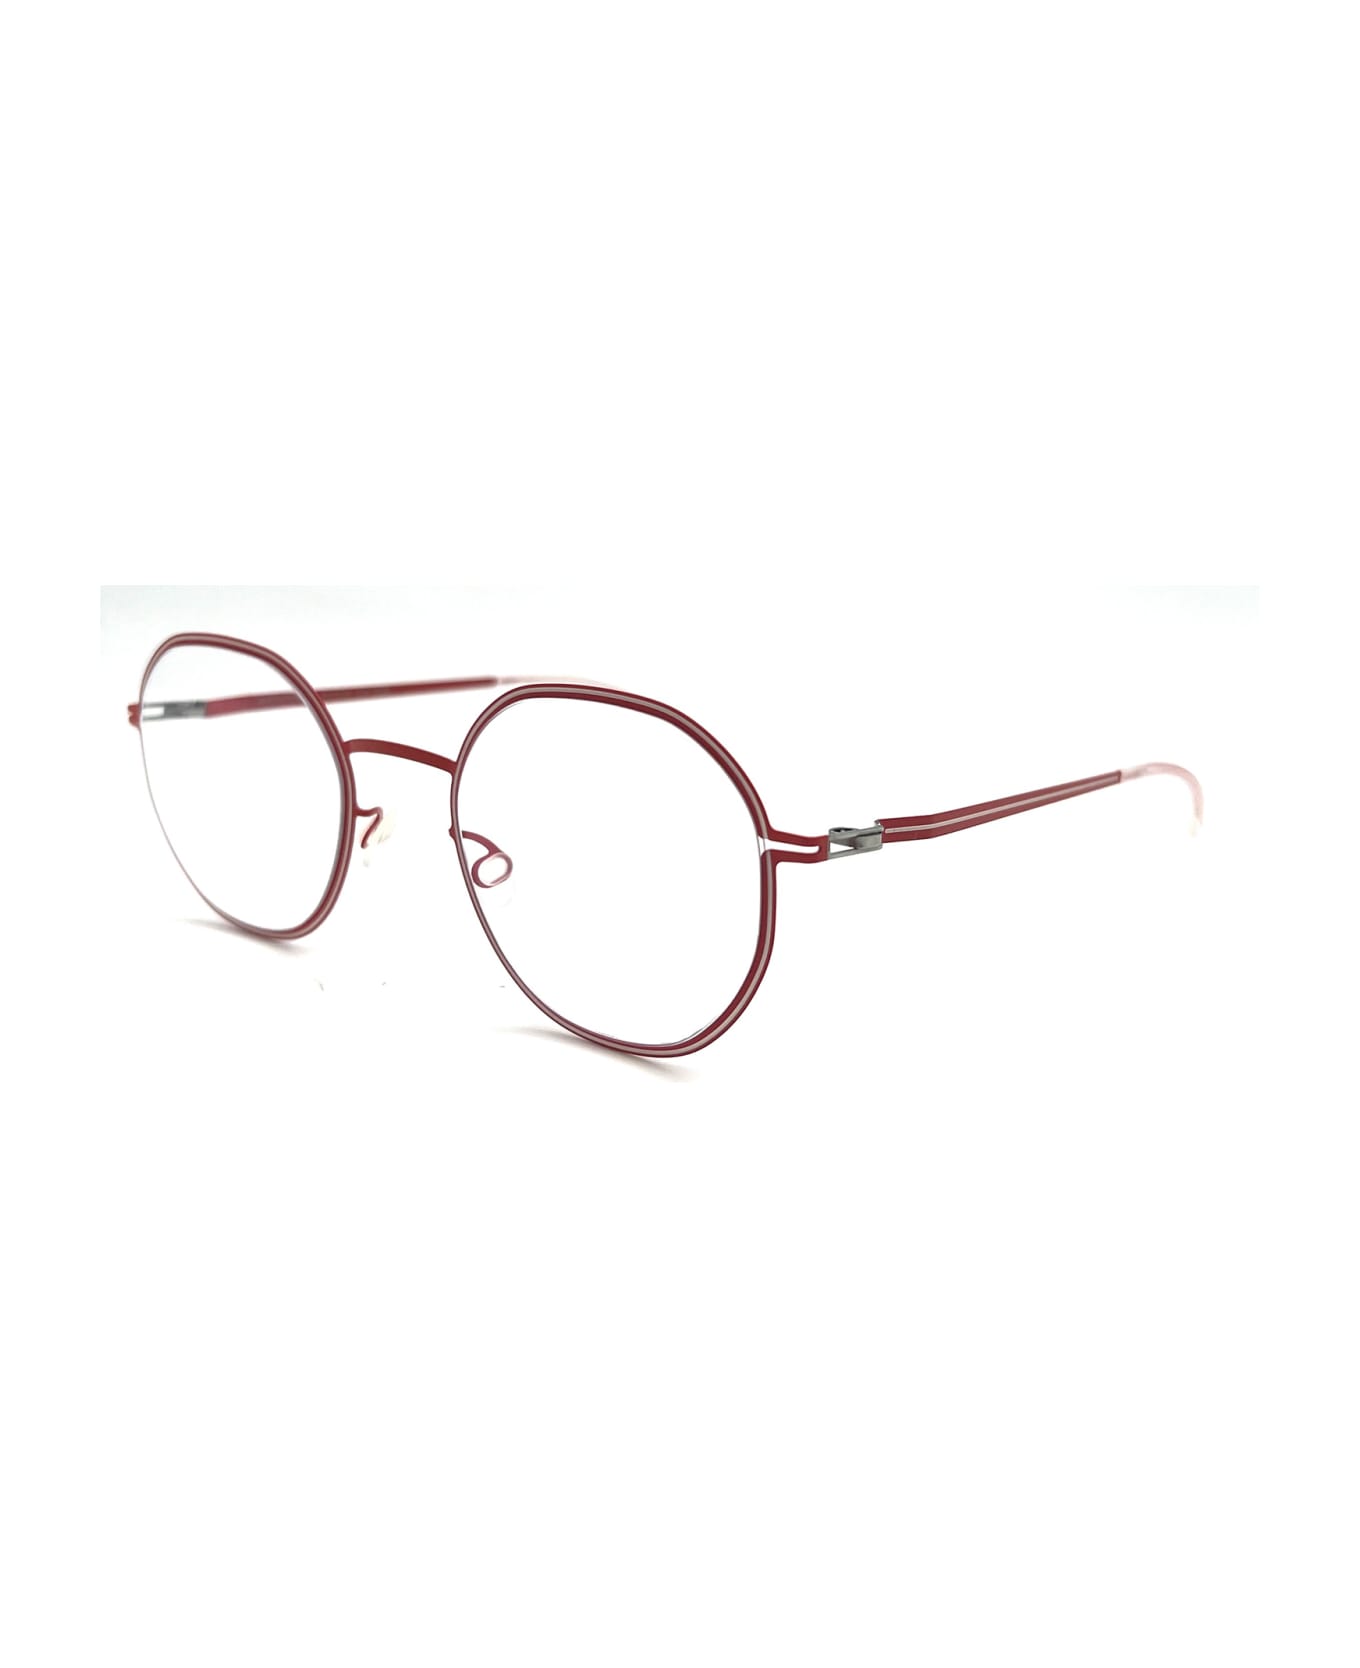 Mykita STUDIO 6.6 Eyewear - Rusty Red/aurore